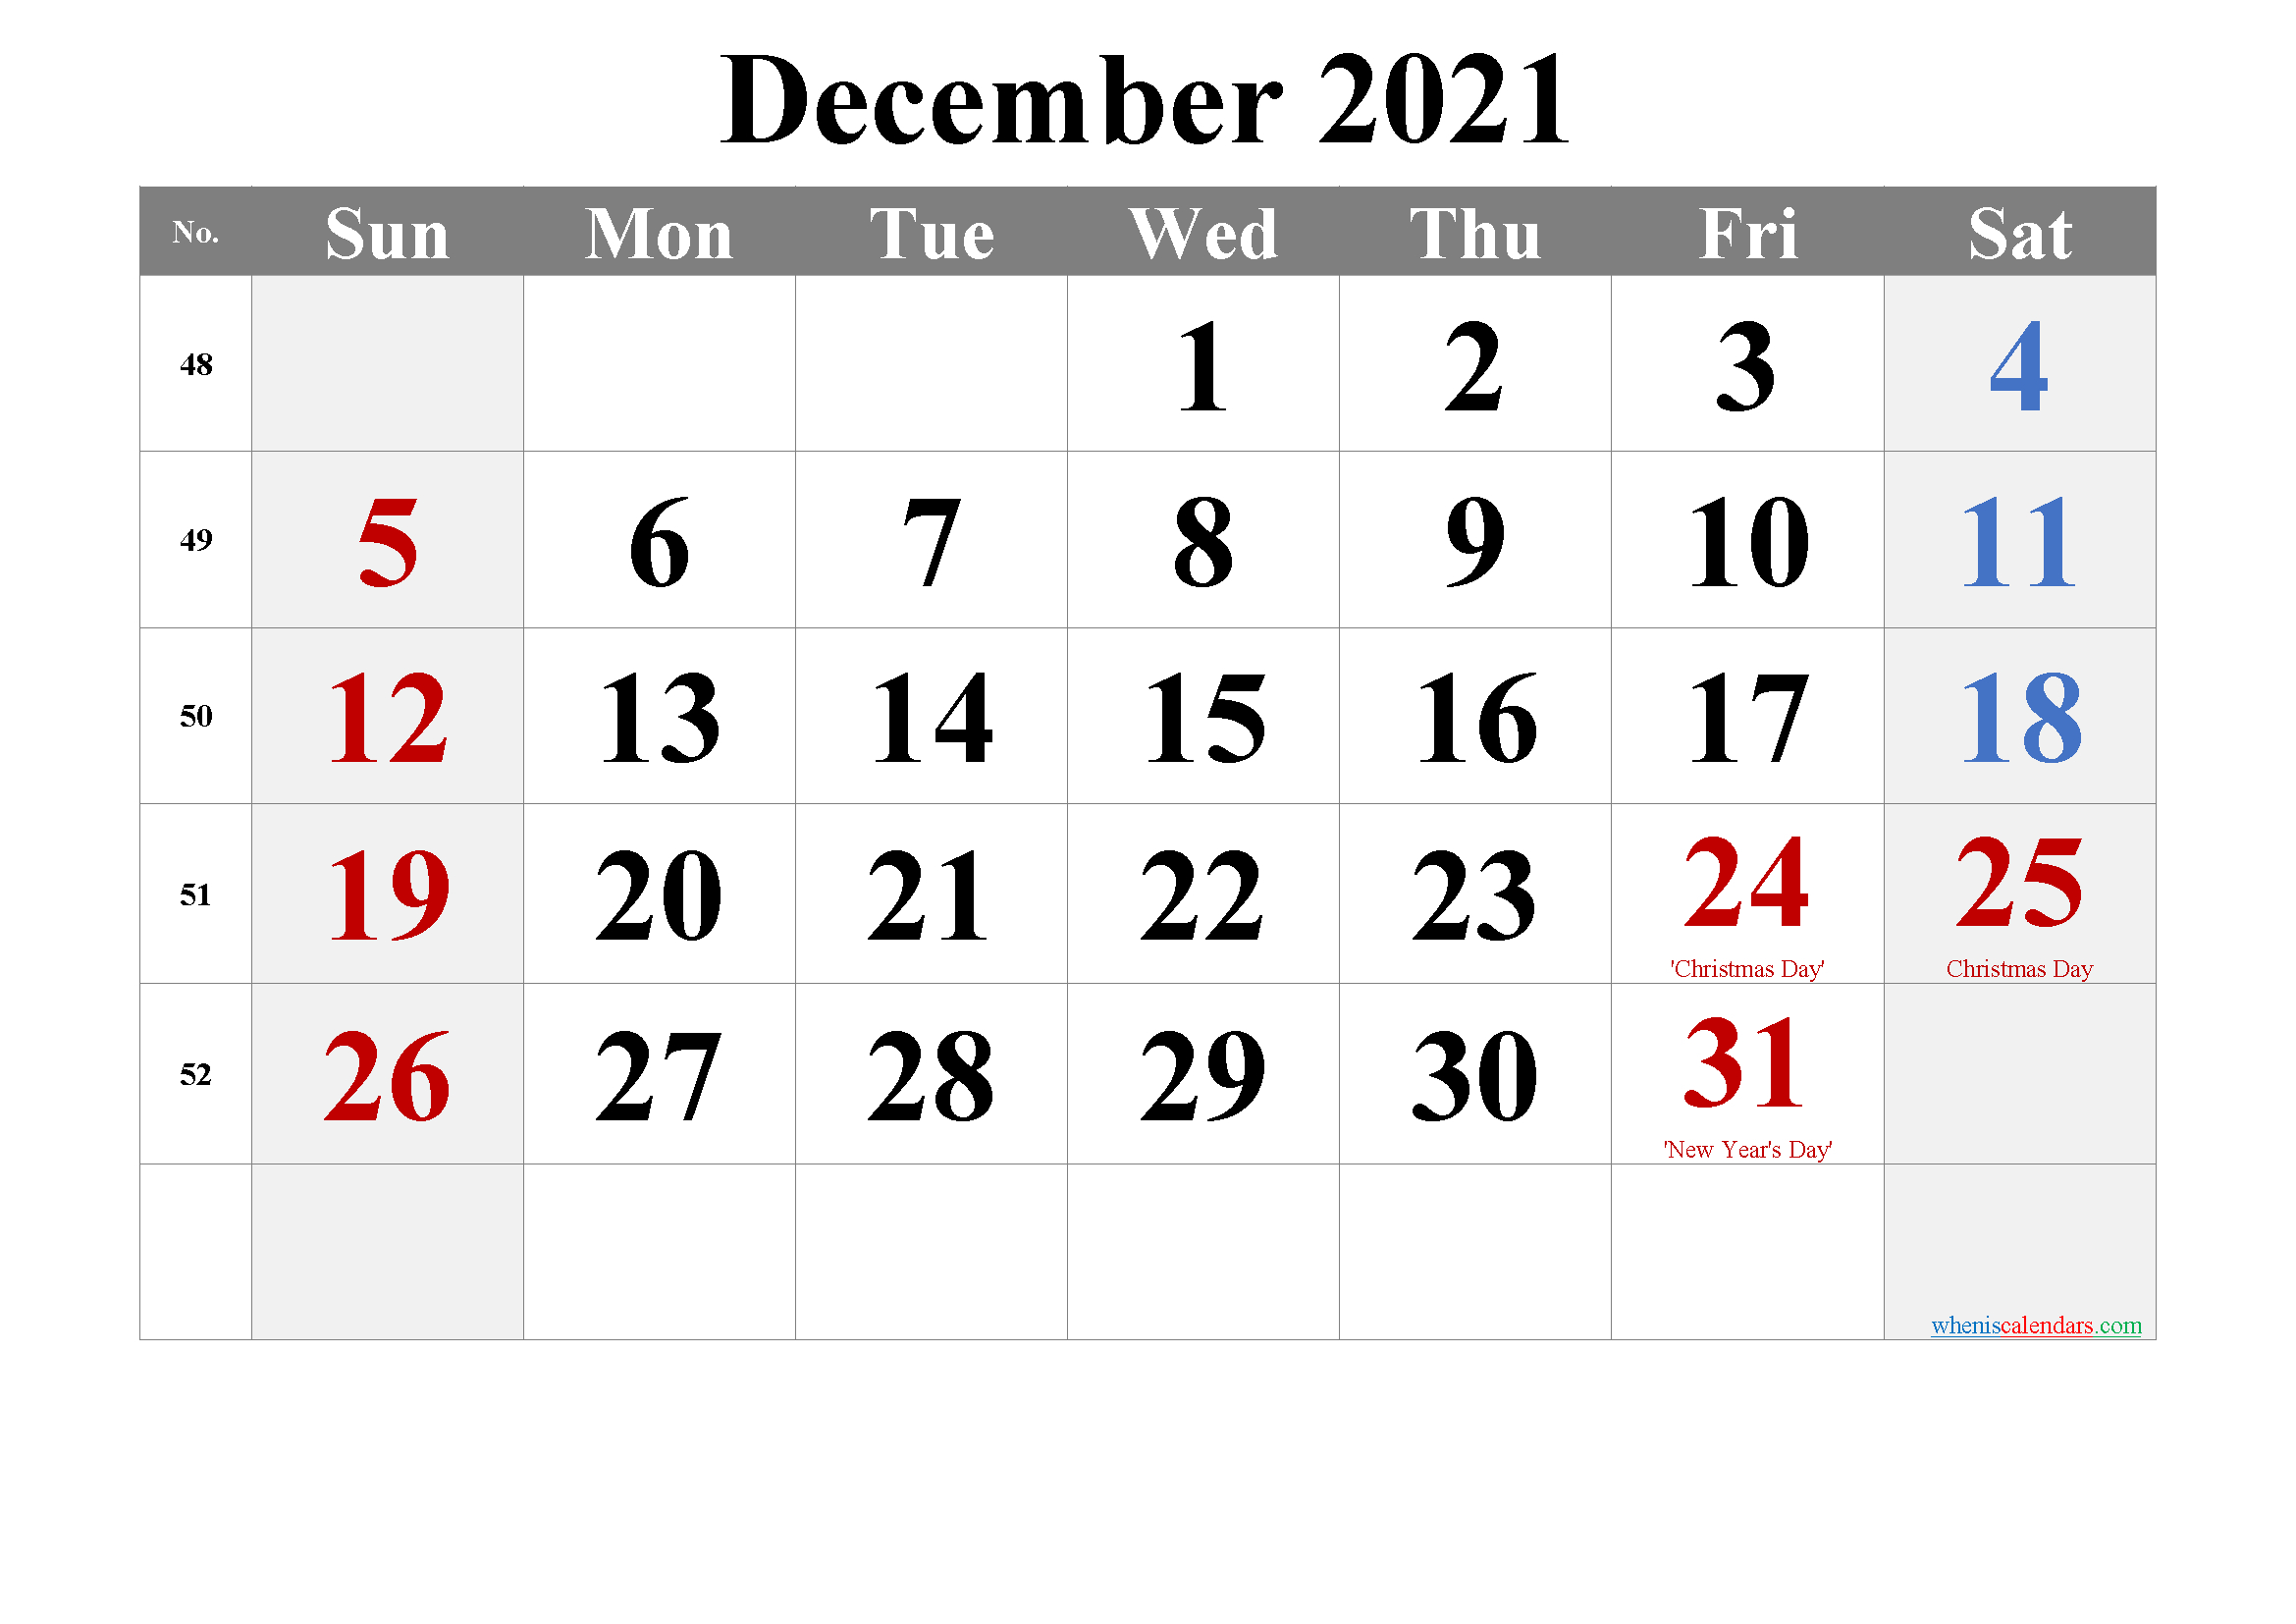 December 2021 Printable Calendar With Holidays - 6 Templates December 2021 Calendar Image